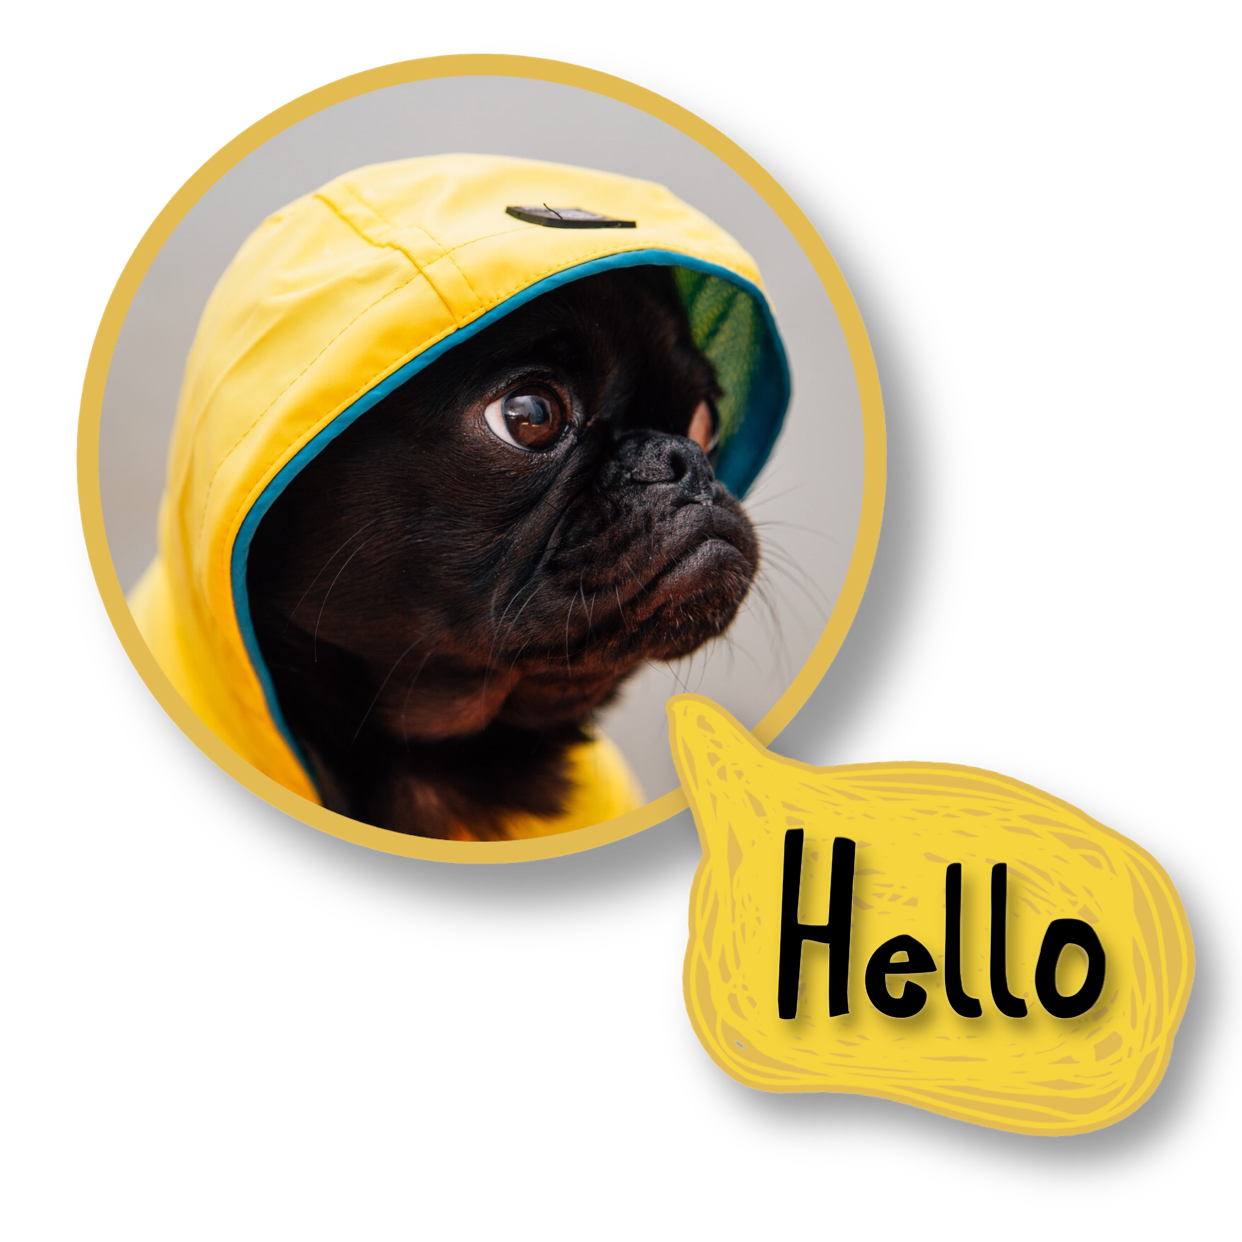 A Small Dog Wearing A Yellow Hat Whatsapp Sticker Template